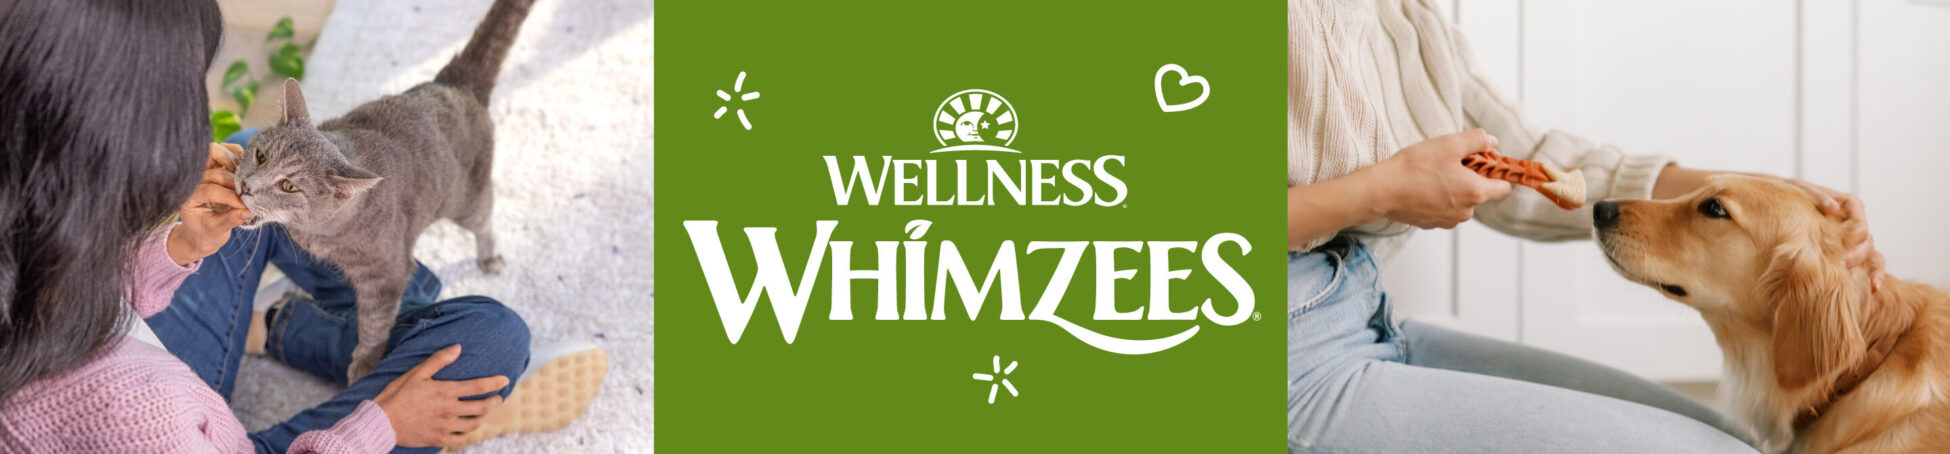 Wellness WHIMZEES